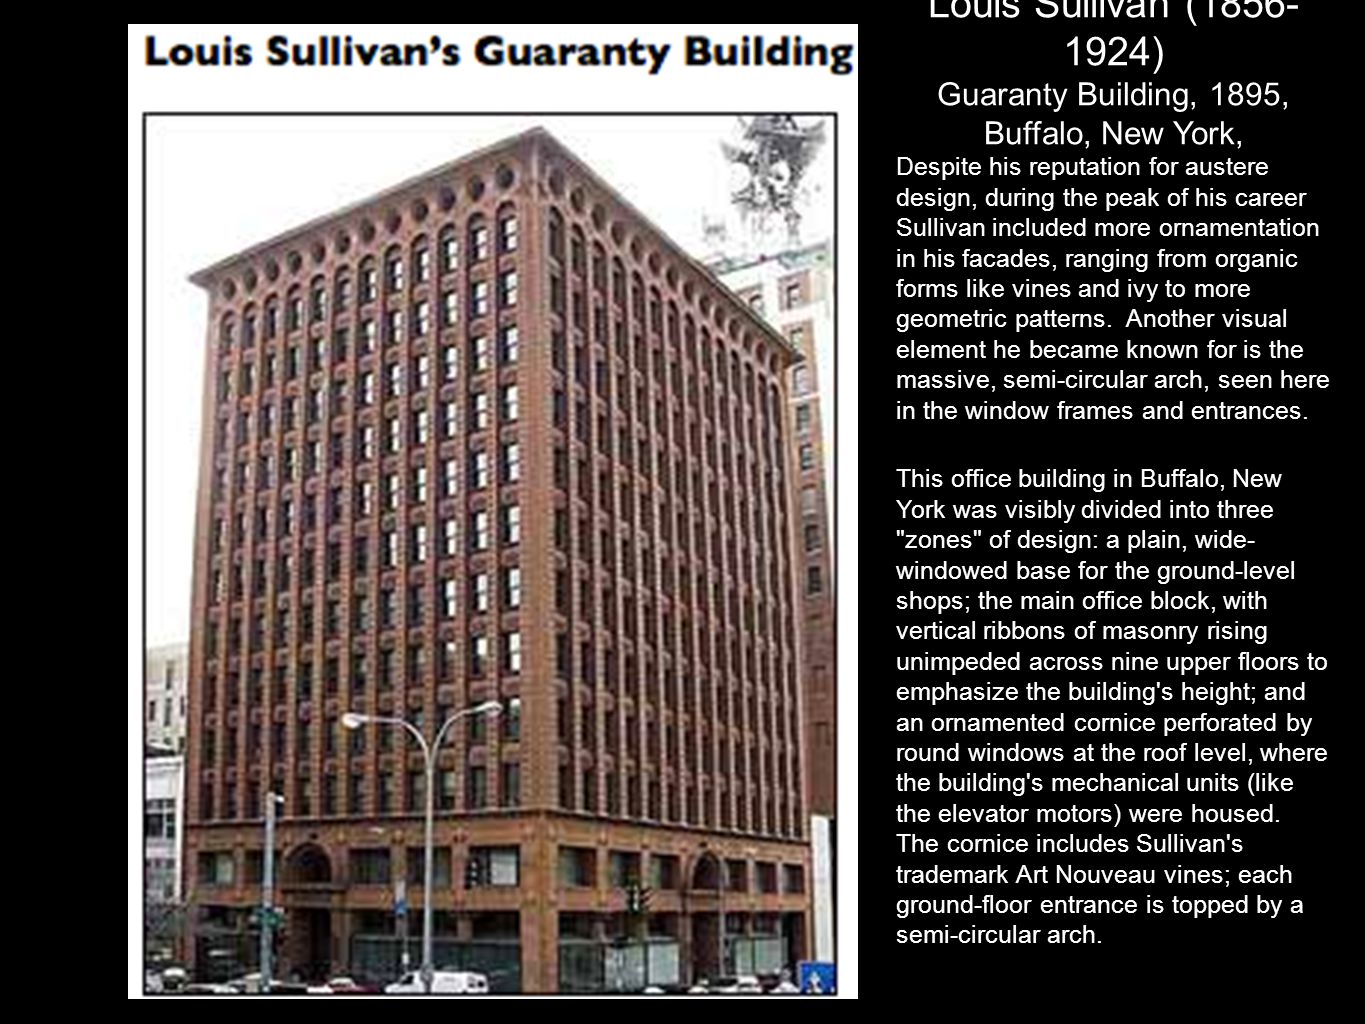 Guaranty Building, 1895, Buffalo, New York,